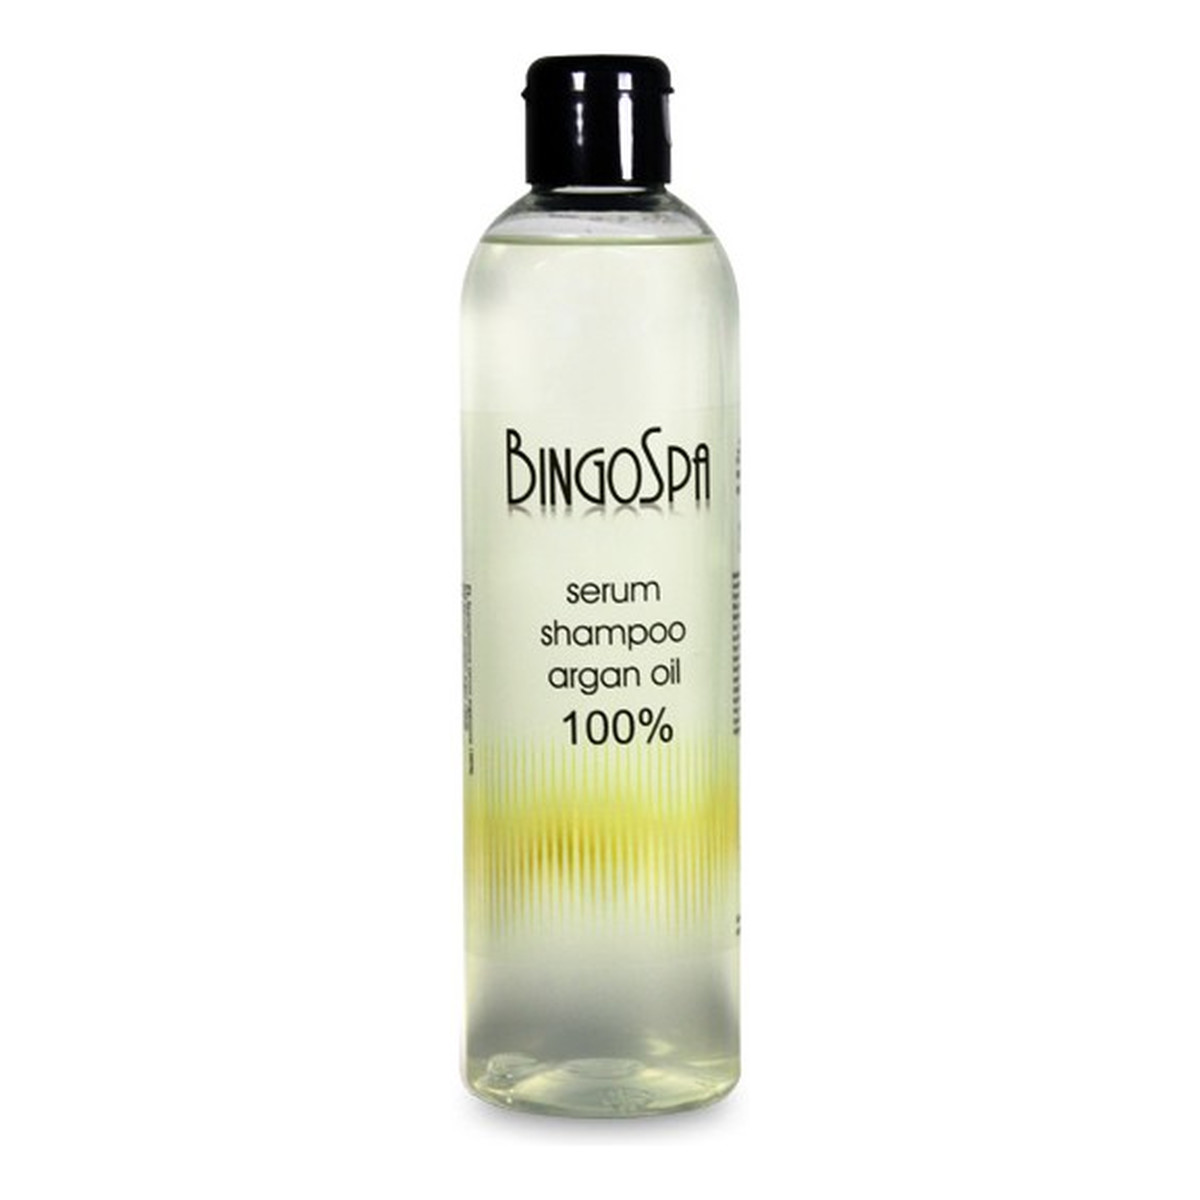 BingoSpa Serum Shampoo Argan Oil Szamponowe Serum Arganowe 100% 300ml